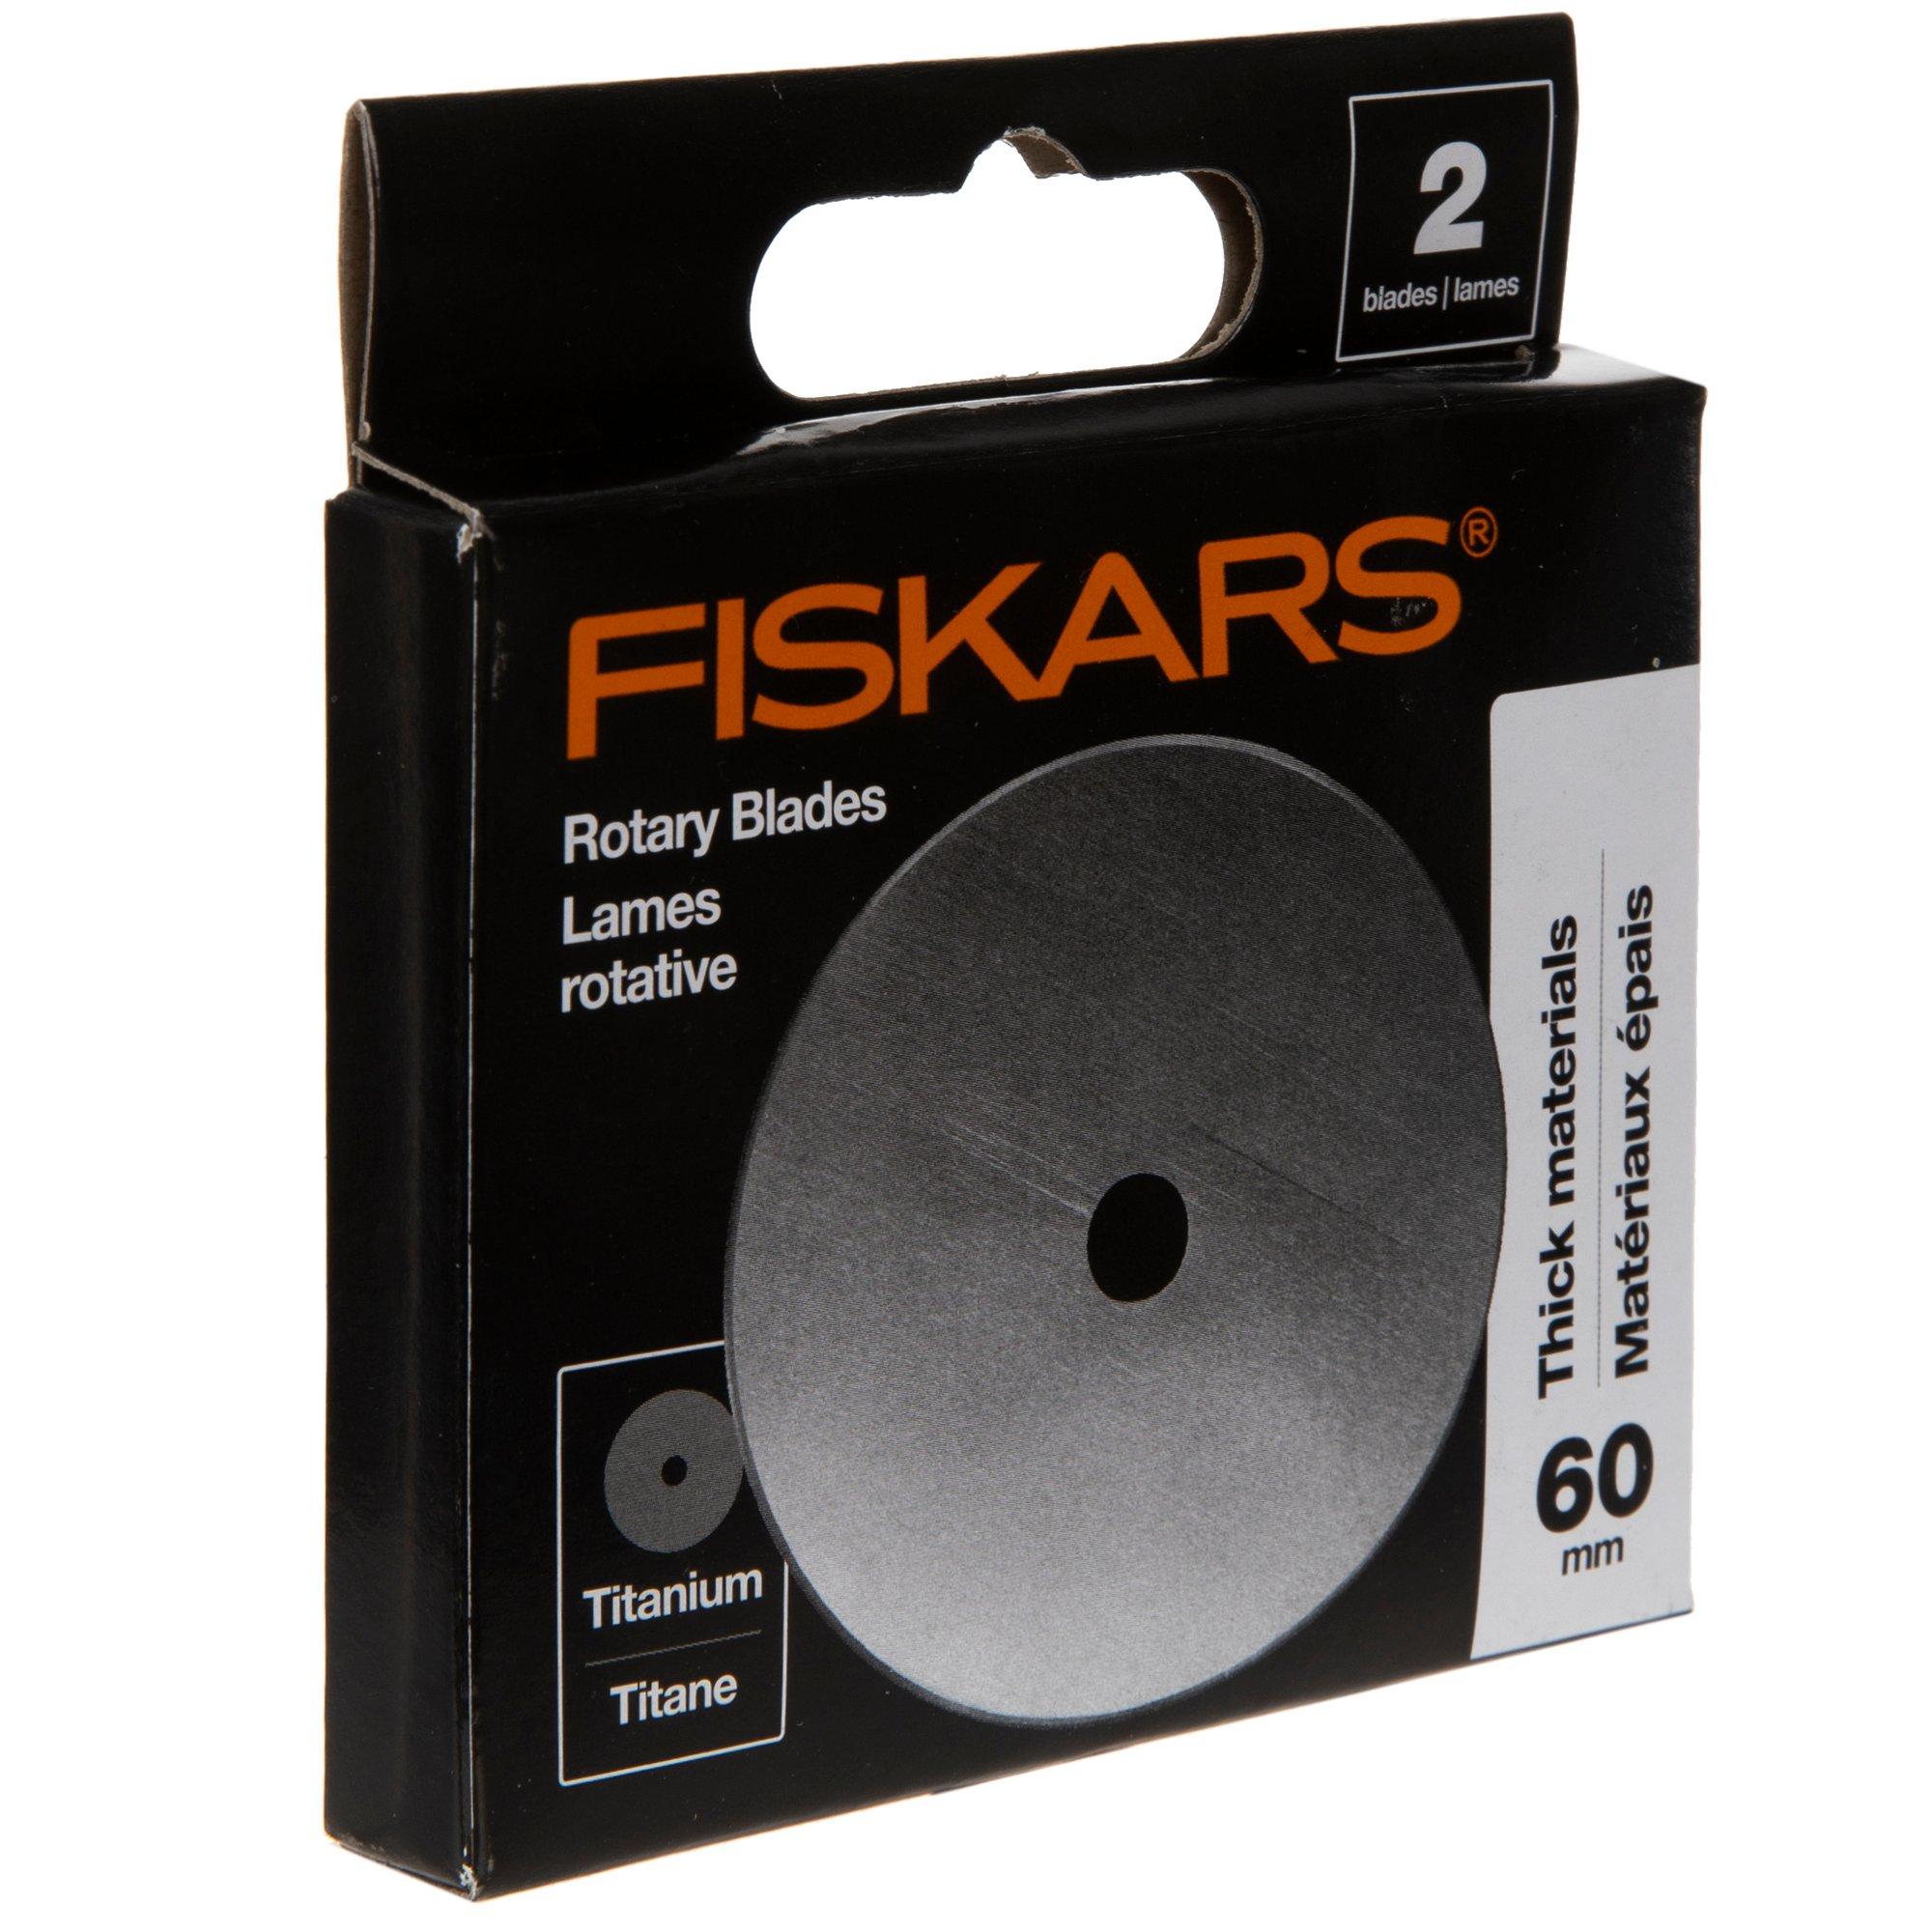 Fiskars Titanium Rotary Blades - 60mm